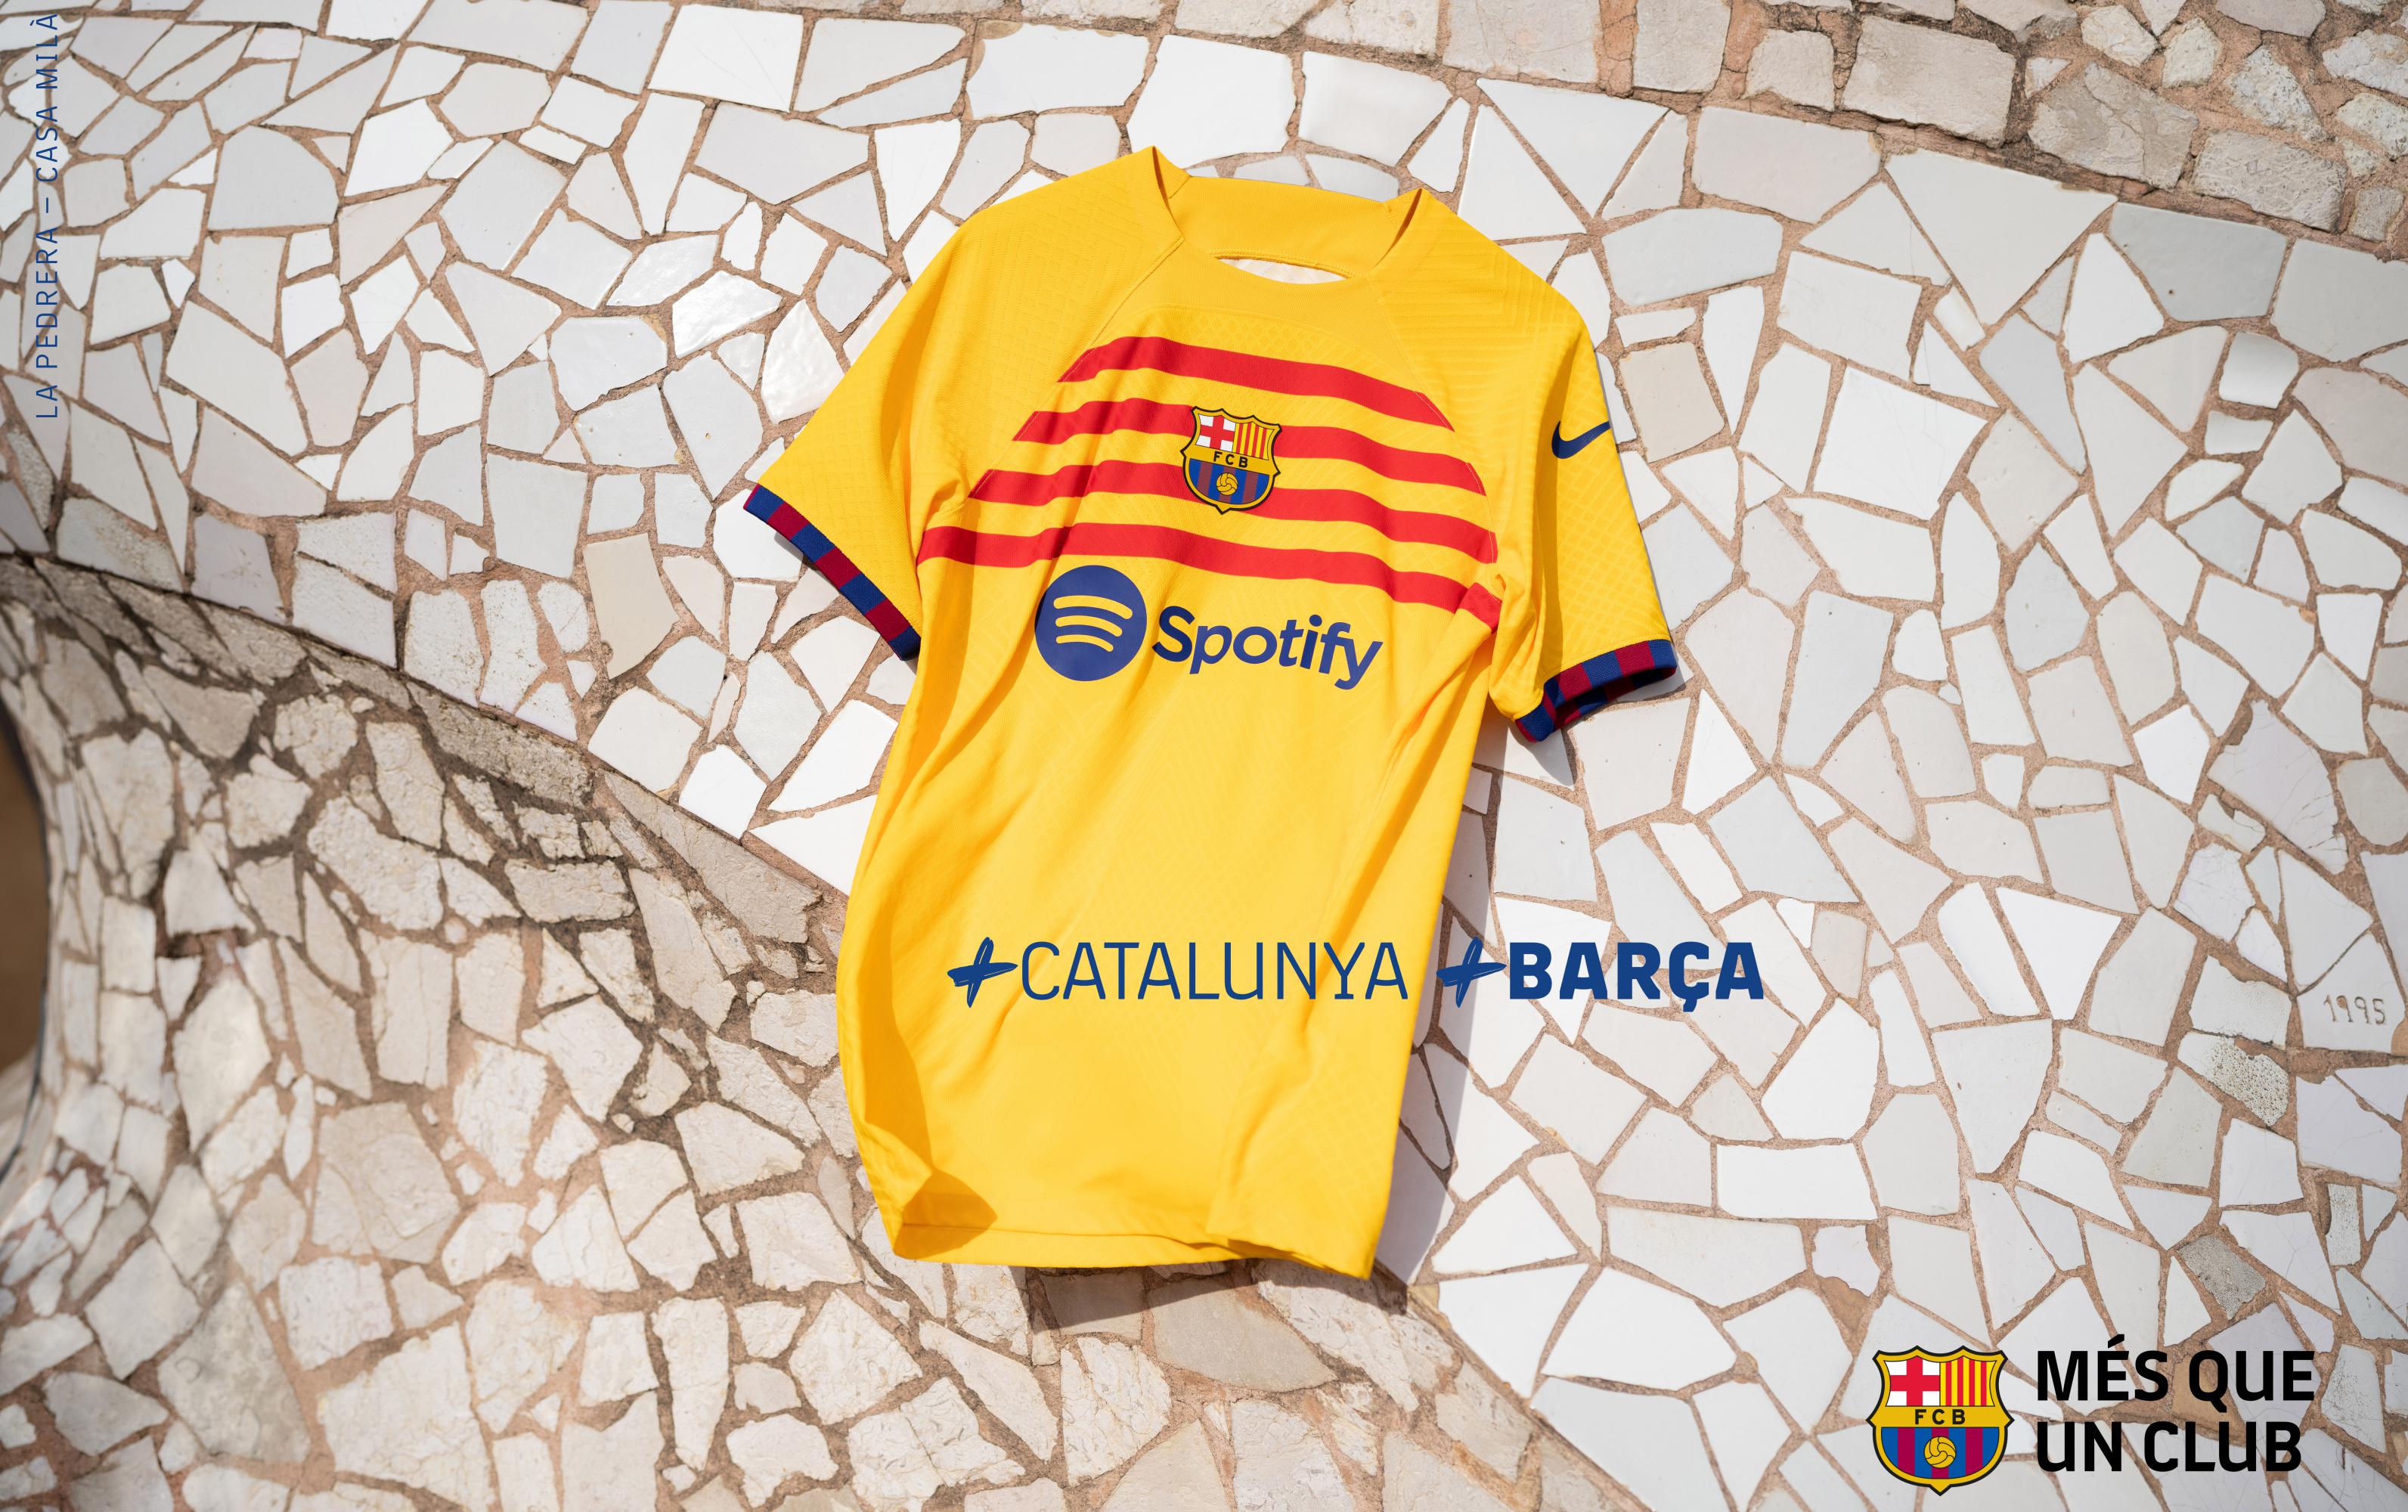 FCBARCELONA kit wallpaper  Fc barcelona, Barcelona jerseys